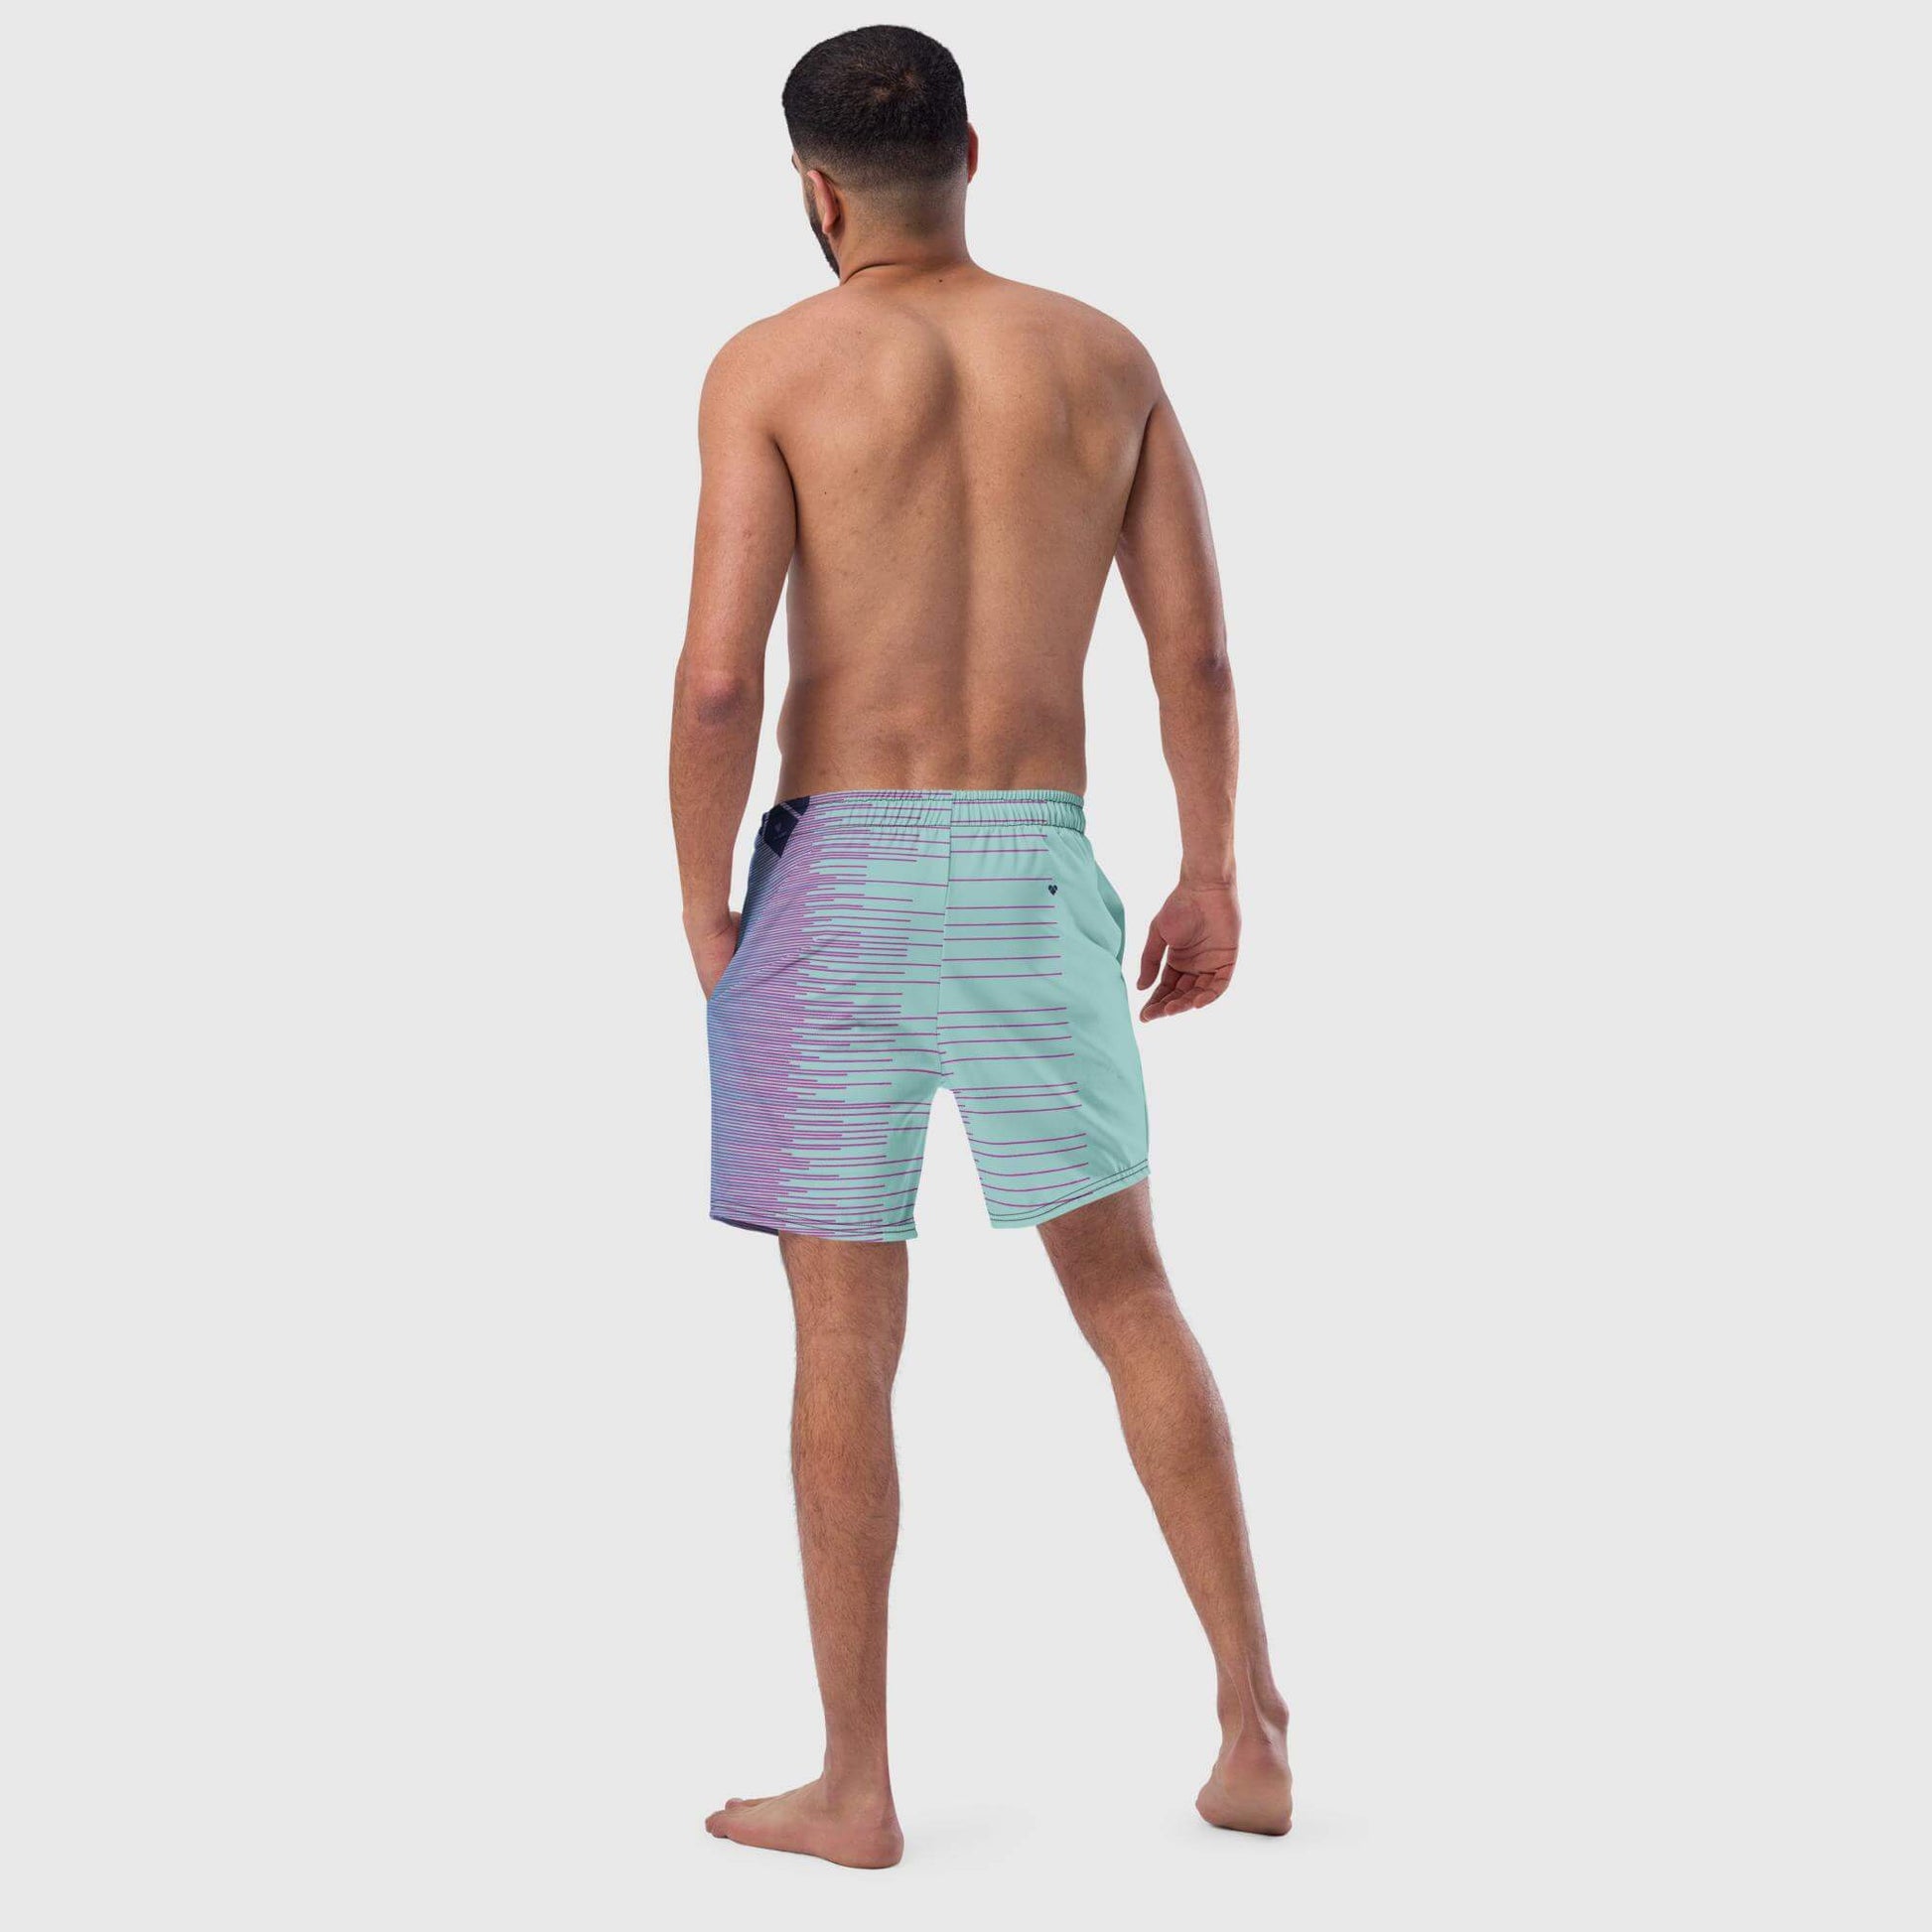 Gradient Design - Mint Stripes Dual Swim Trunks by CRiZ AMOR